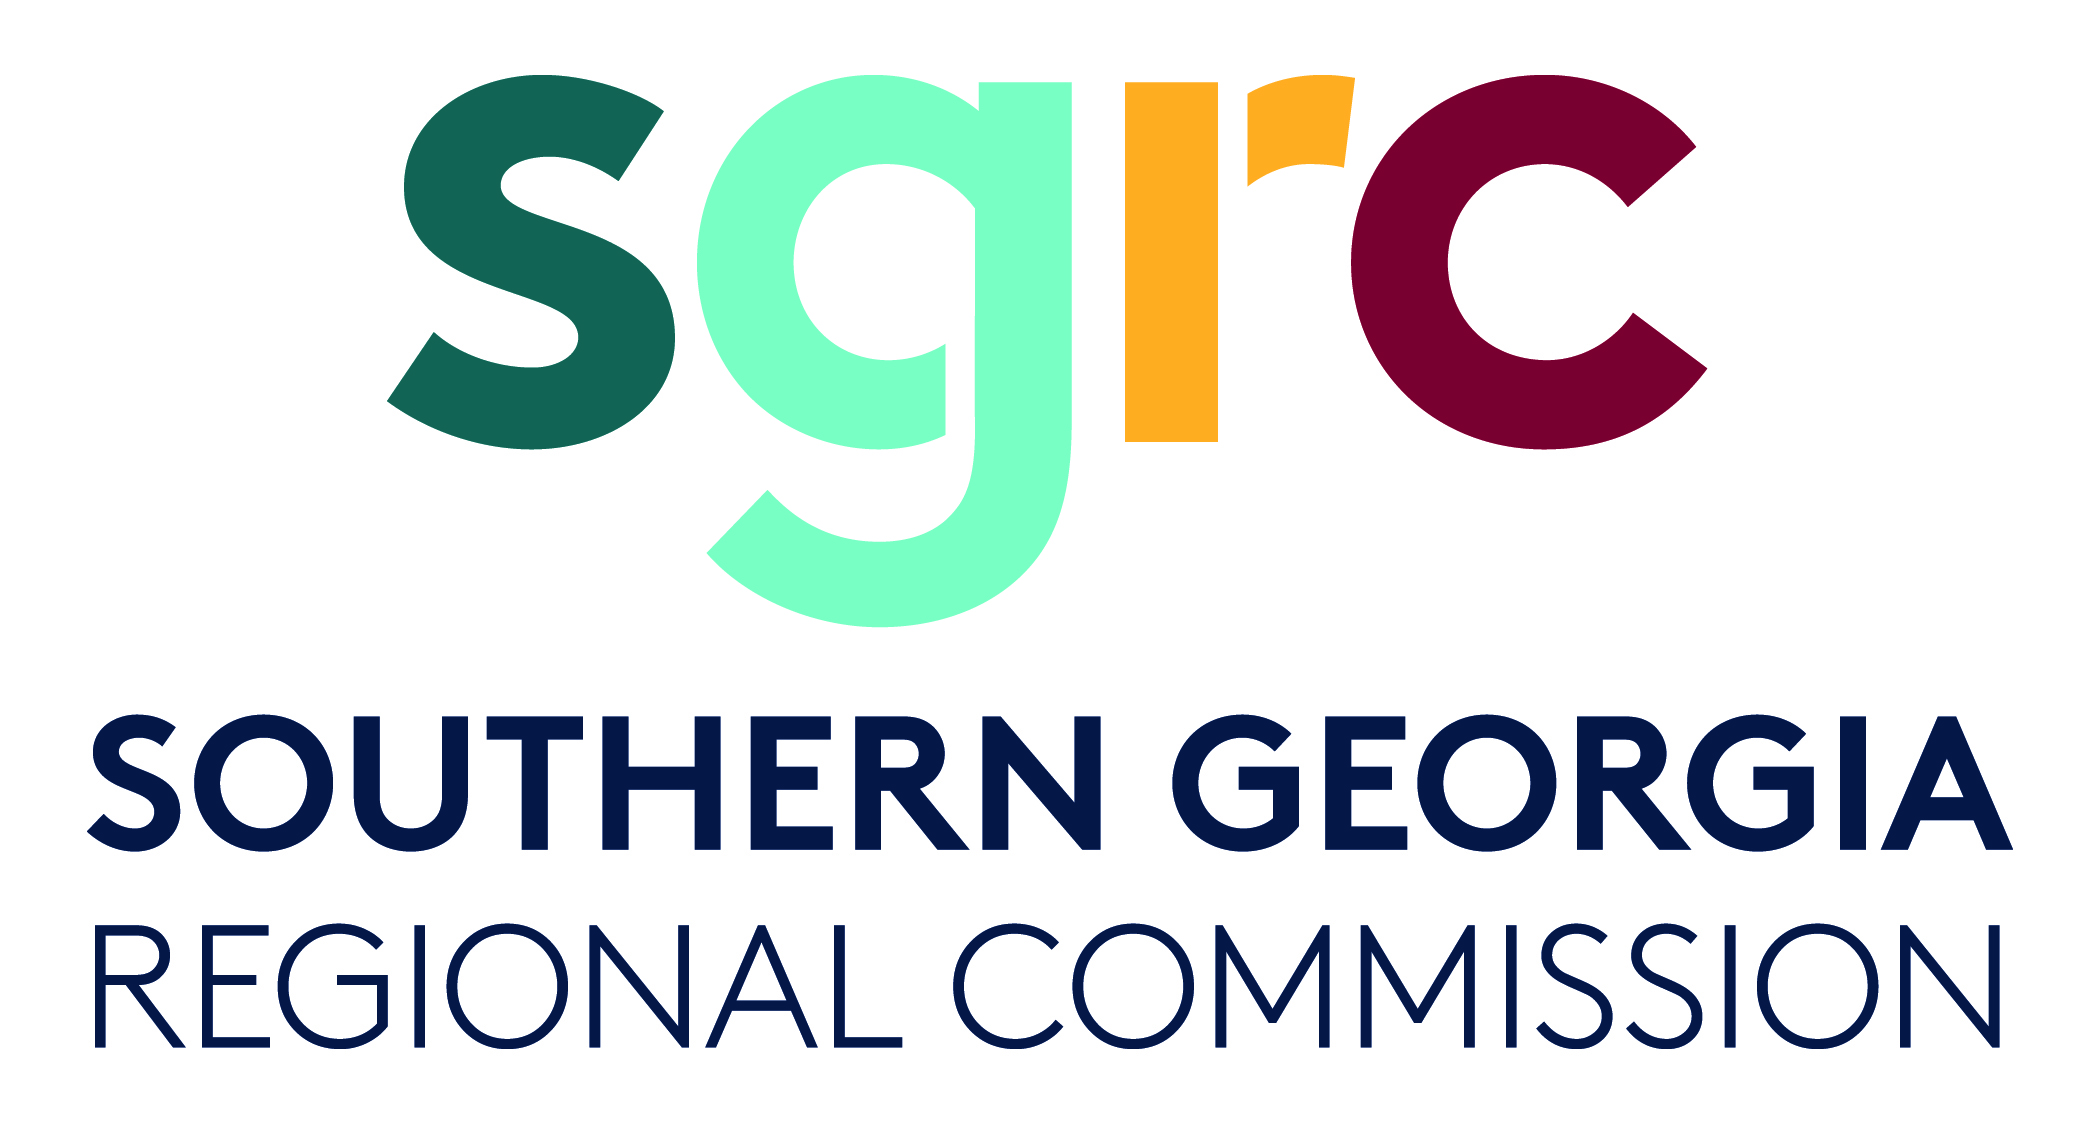 Southern Georgia Regional Commission